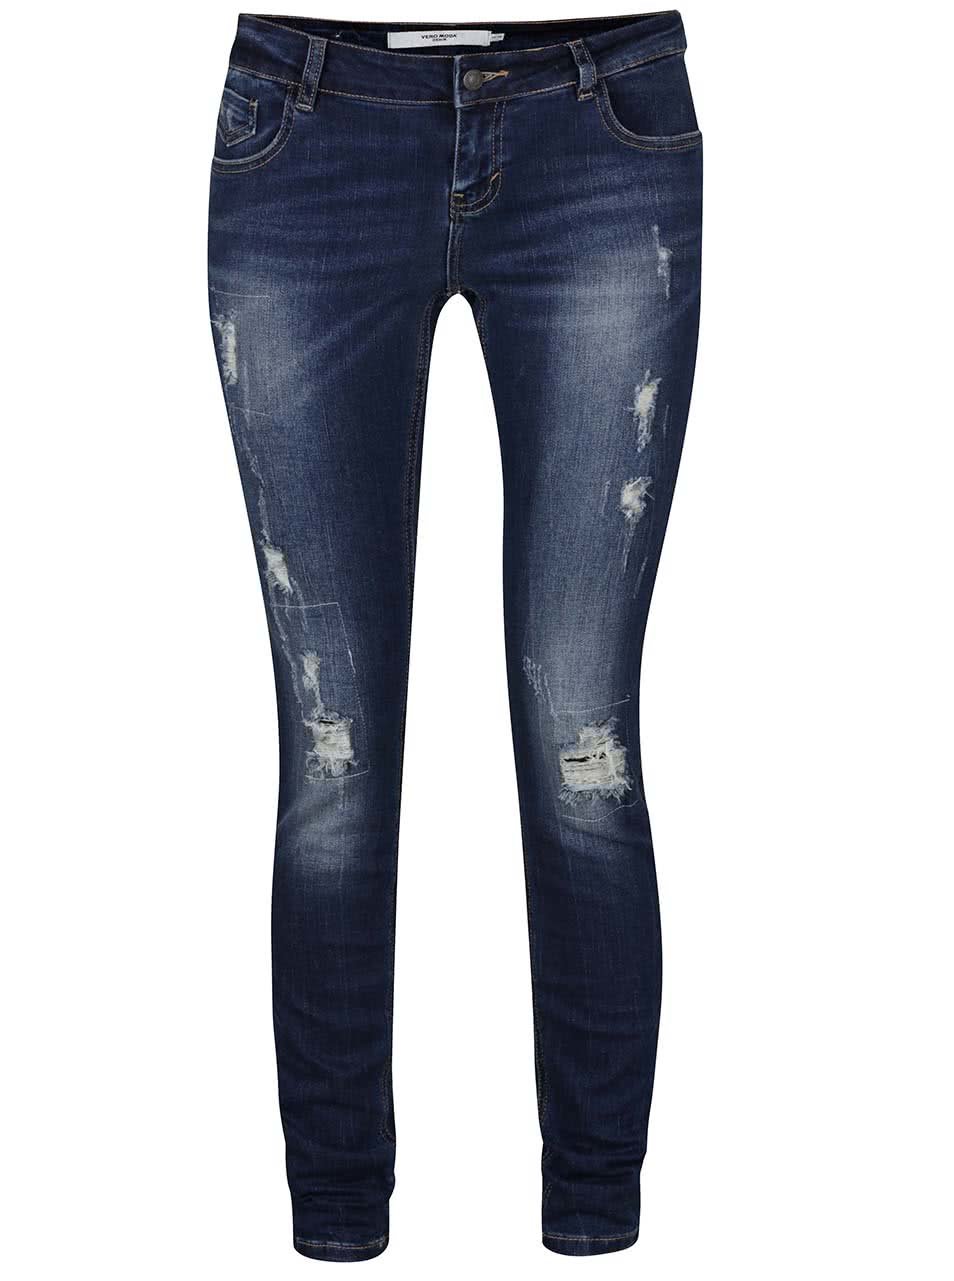 Modré džíny s potrhaným efektem Vero Moda Five